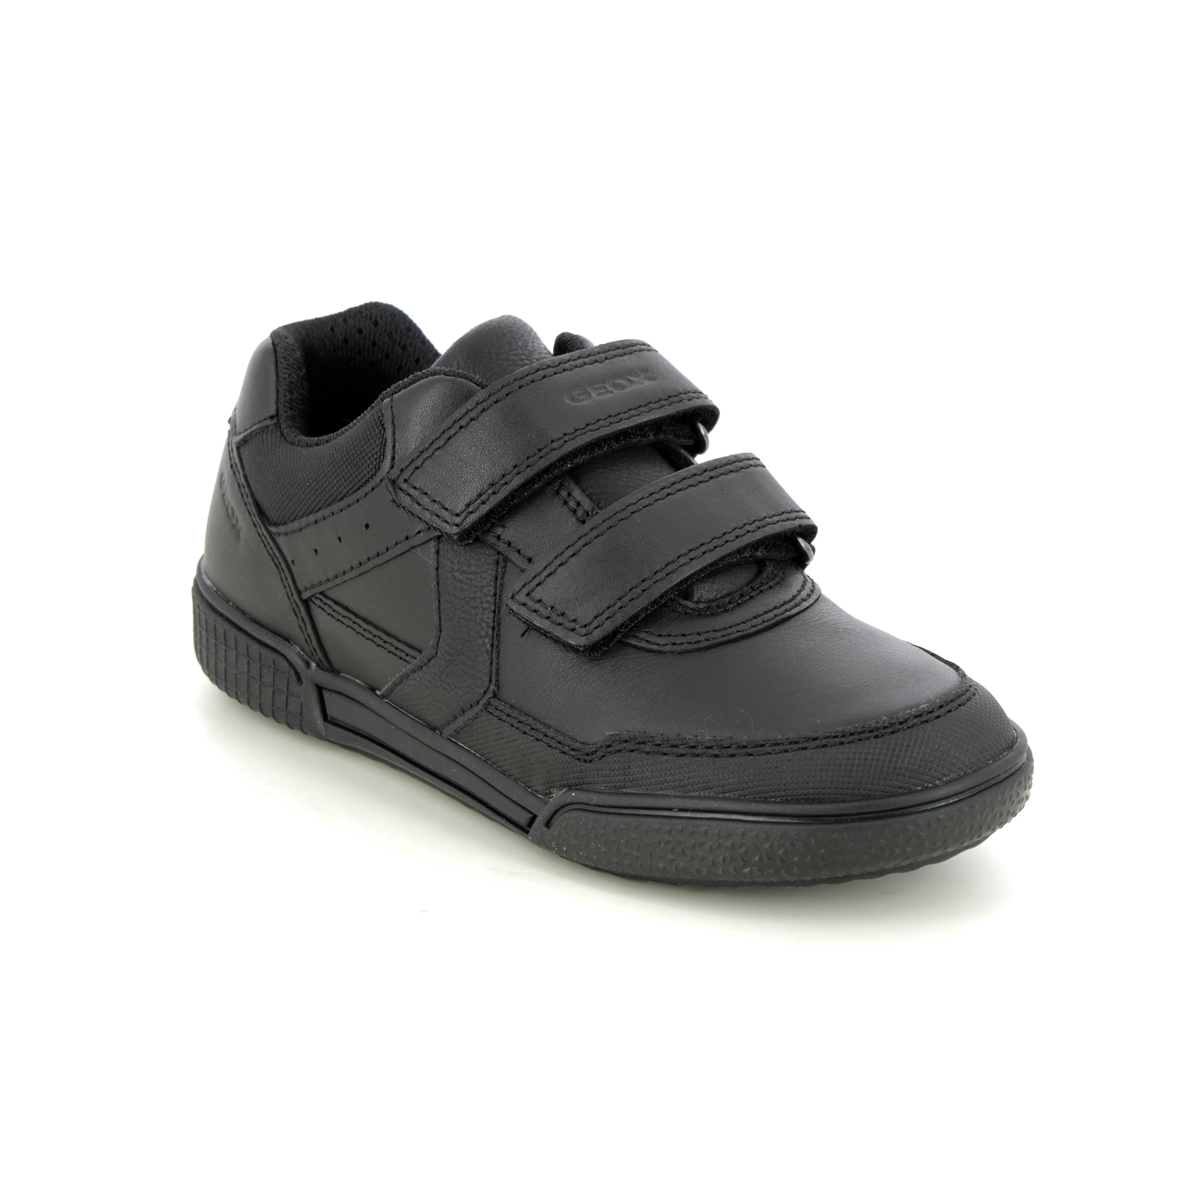 Geox - Poseido Boy 2V (Black Leather) J02Bca-C9999 In Size 32 In Plain Black Leather For School For kids